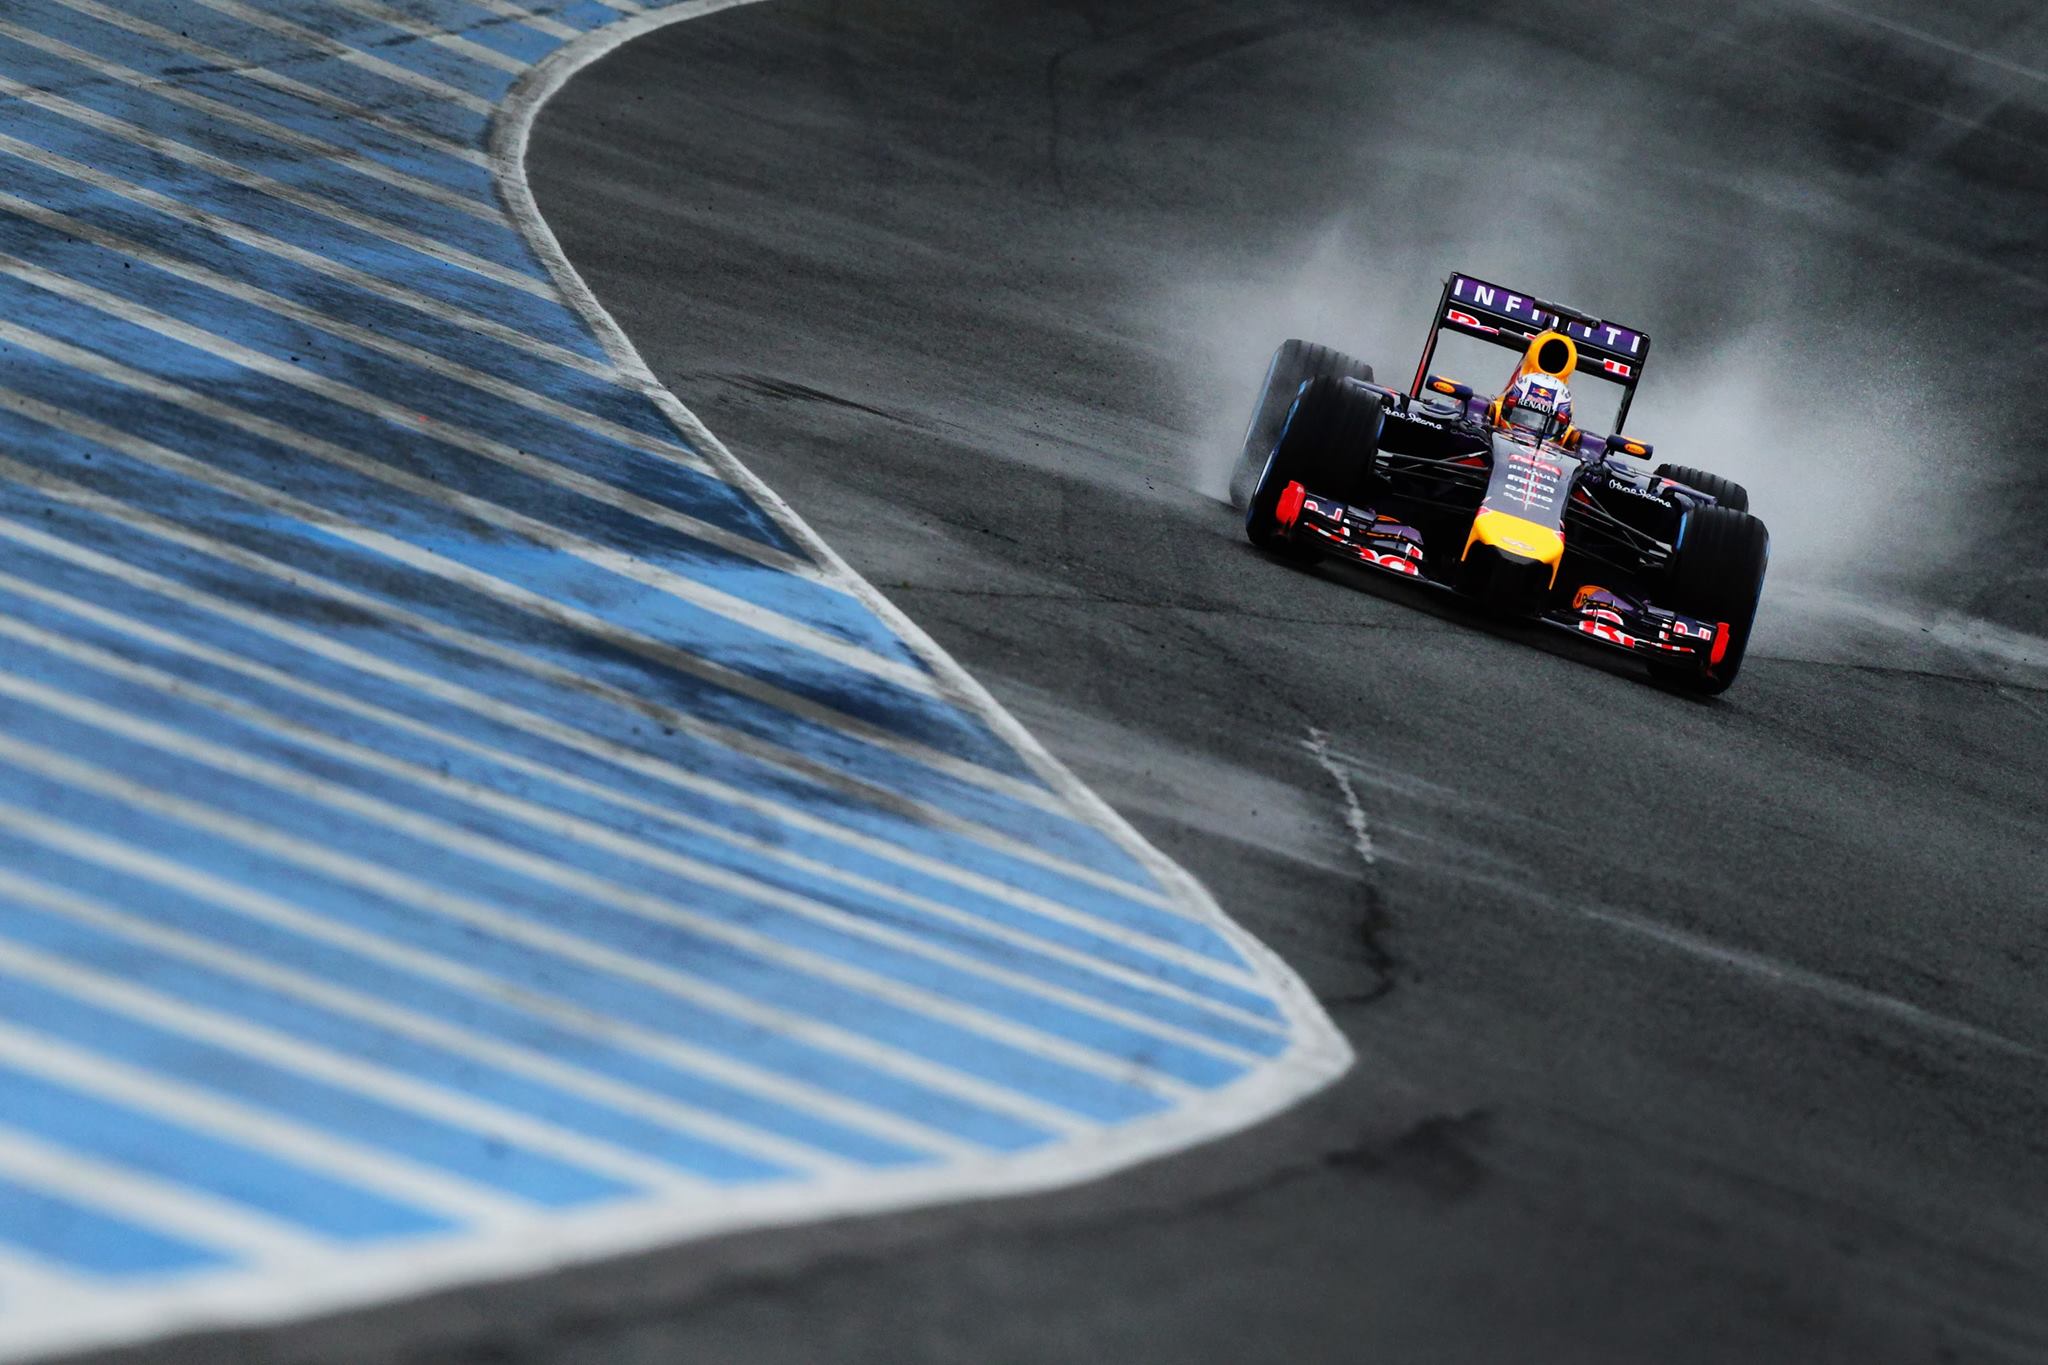 General 2048x1365 Formula 1 Red Bull Red Bull Racing race cars racing car vehicle dutch tilt sport motorsport Daniel Ricciardo